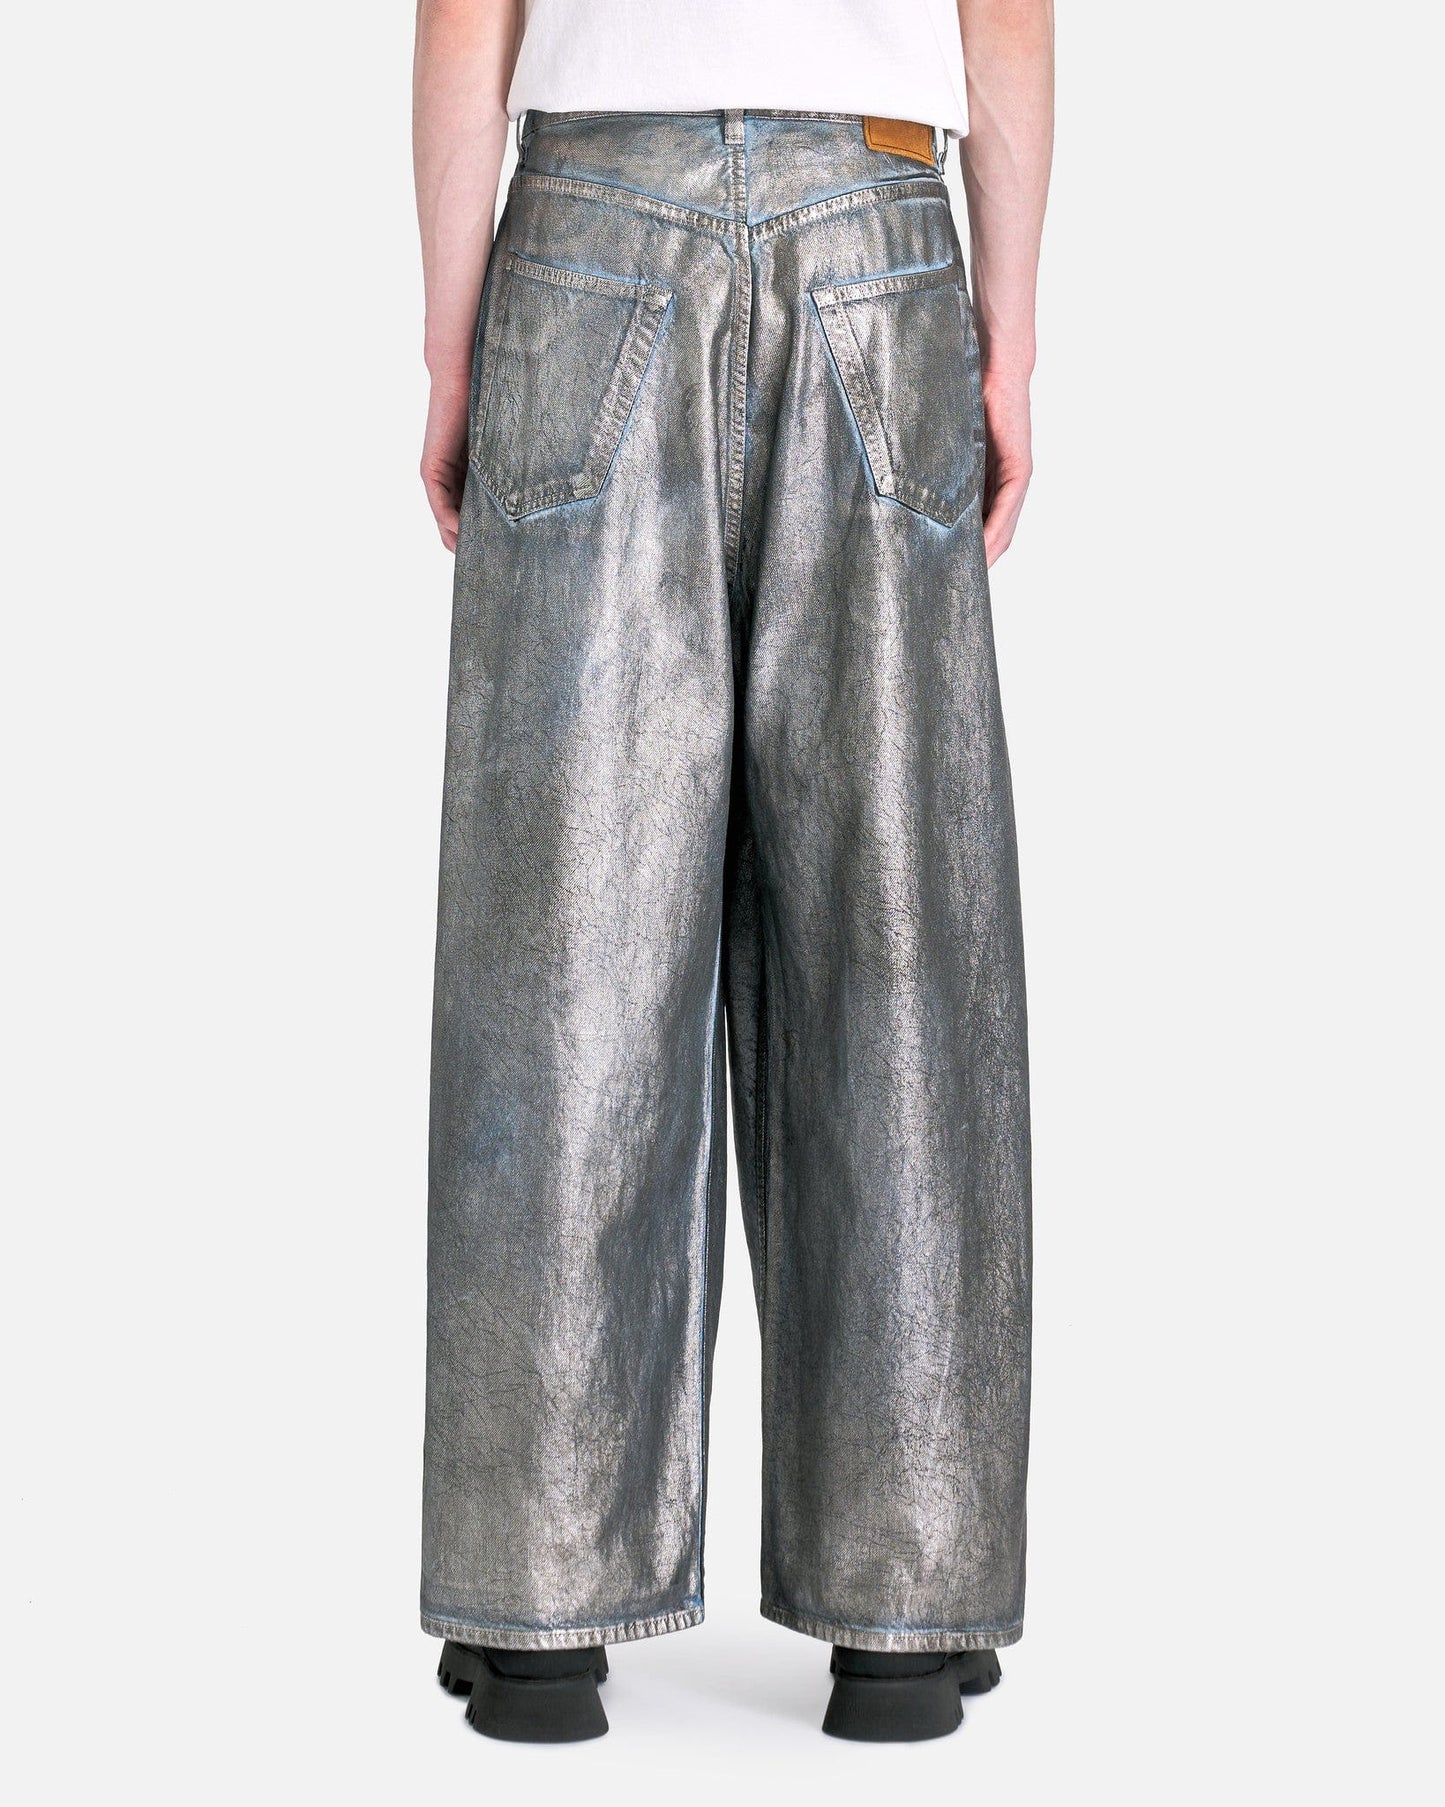 Acne Studios Men's Pants Trousers in Silver/Blue